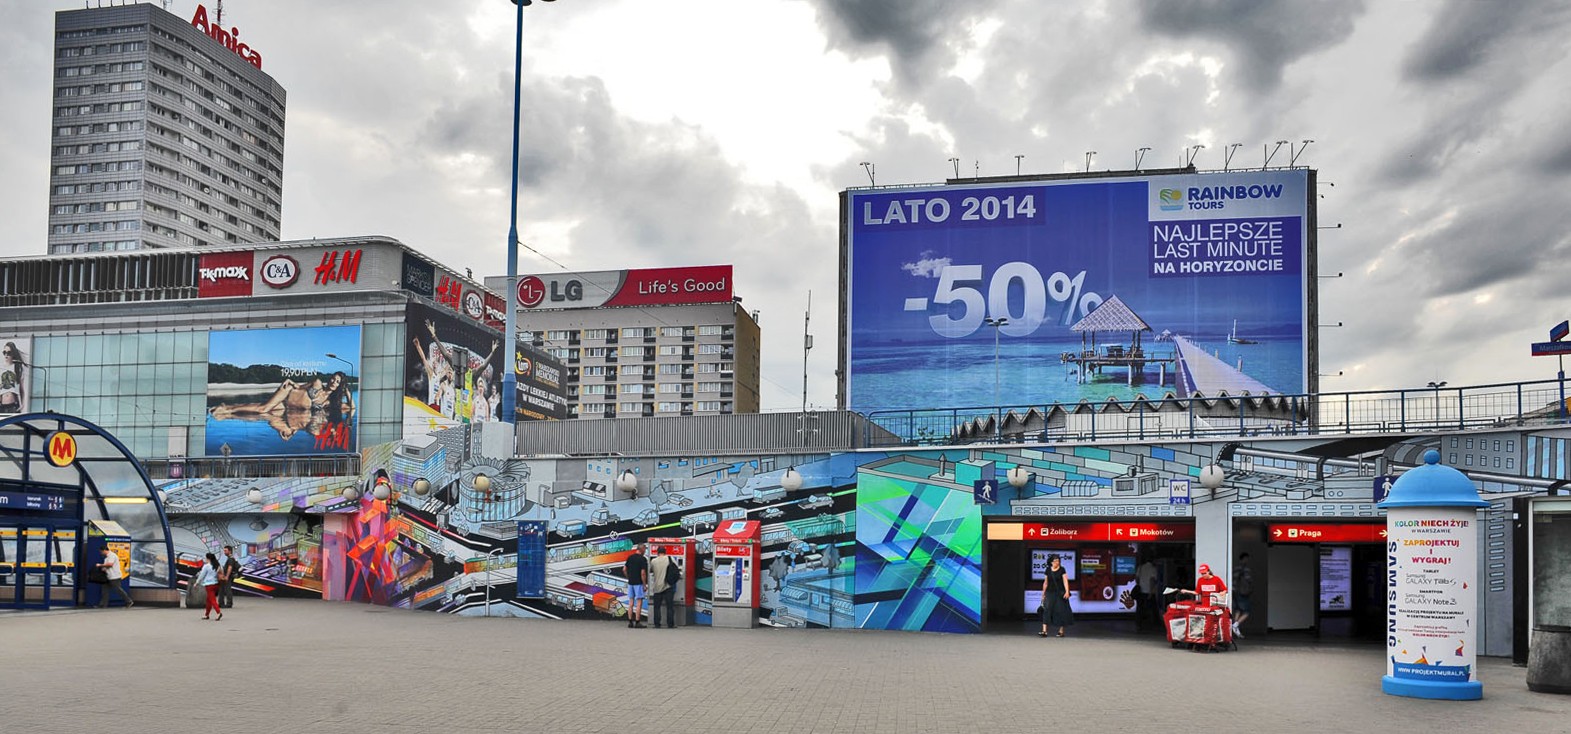 Warszawskie Metro Centrum Samsung Kolor niech żyje  | Mural na warszawskiej patelni - Kolor niech żyje! | Portfolio